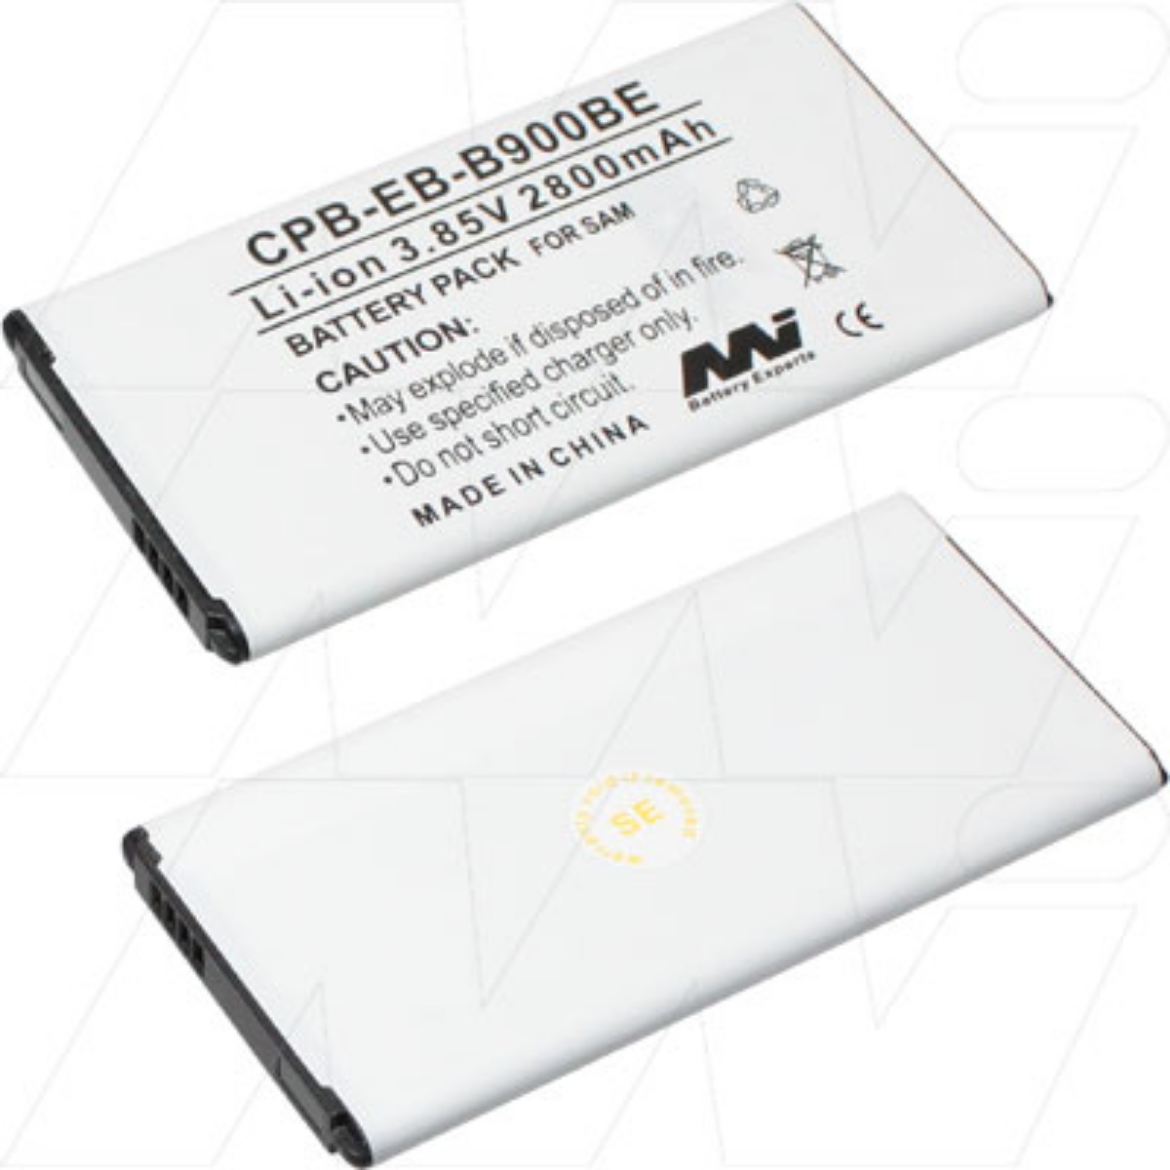 Picture of CPB-EB-B900BE-BP1 SAMSUNG MOBILE PHONE BATTERY 3.85V 2800 MAH LI-ION GALAXY S5 W/ NFC EB-BG900BBU EB-BG900BE